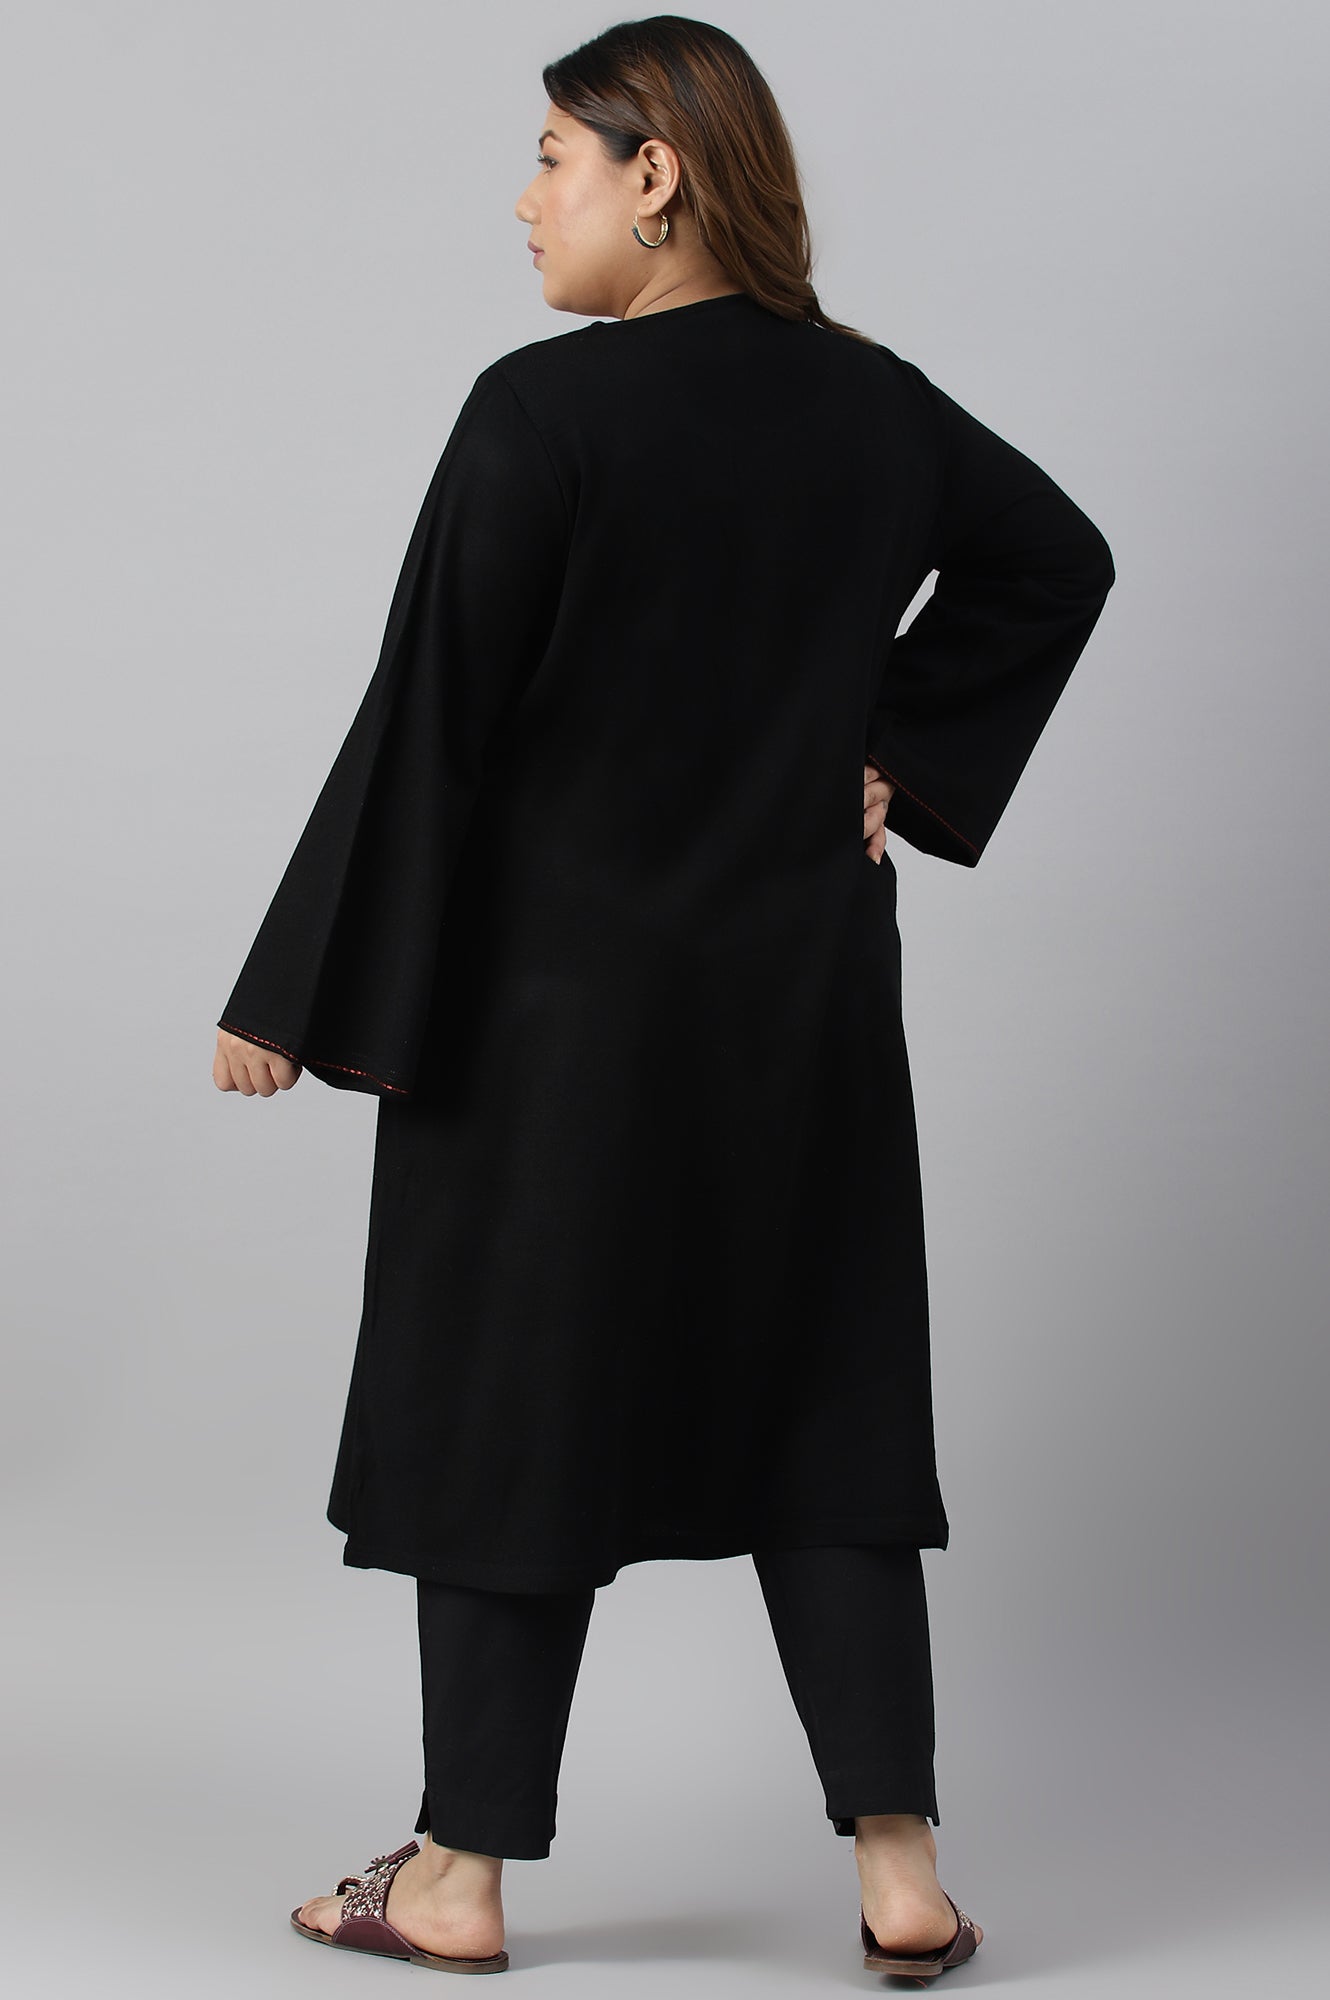 Black Embroidered Plus Size Winter kurta